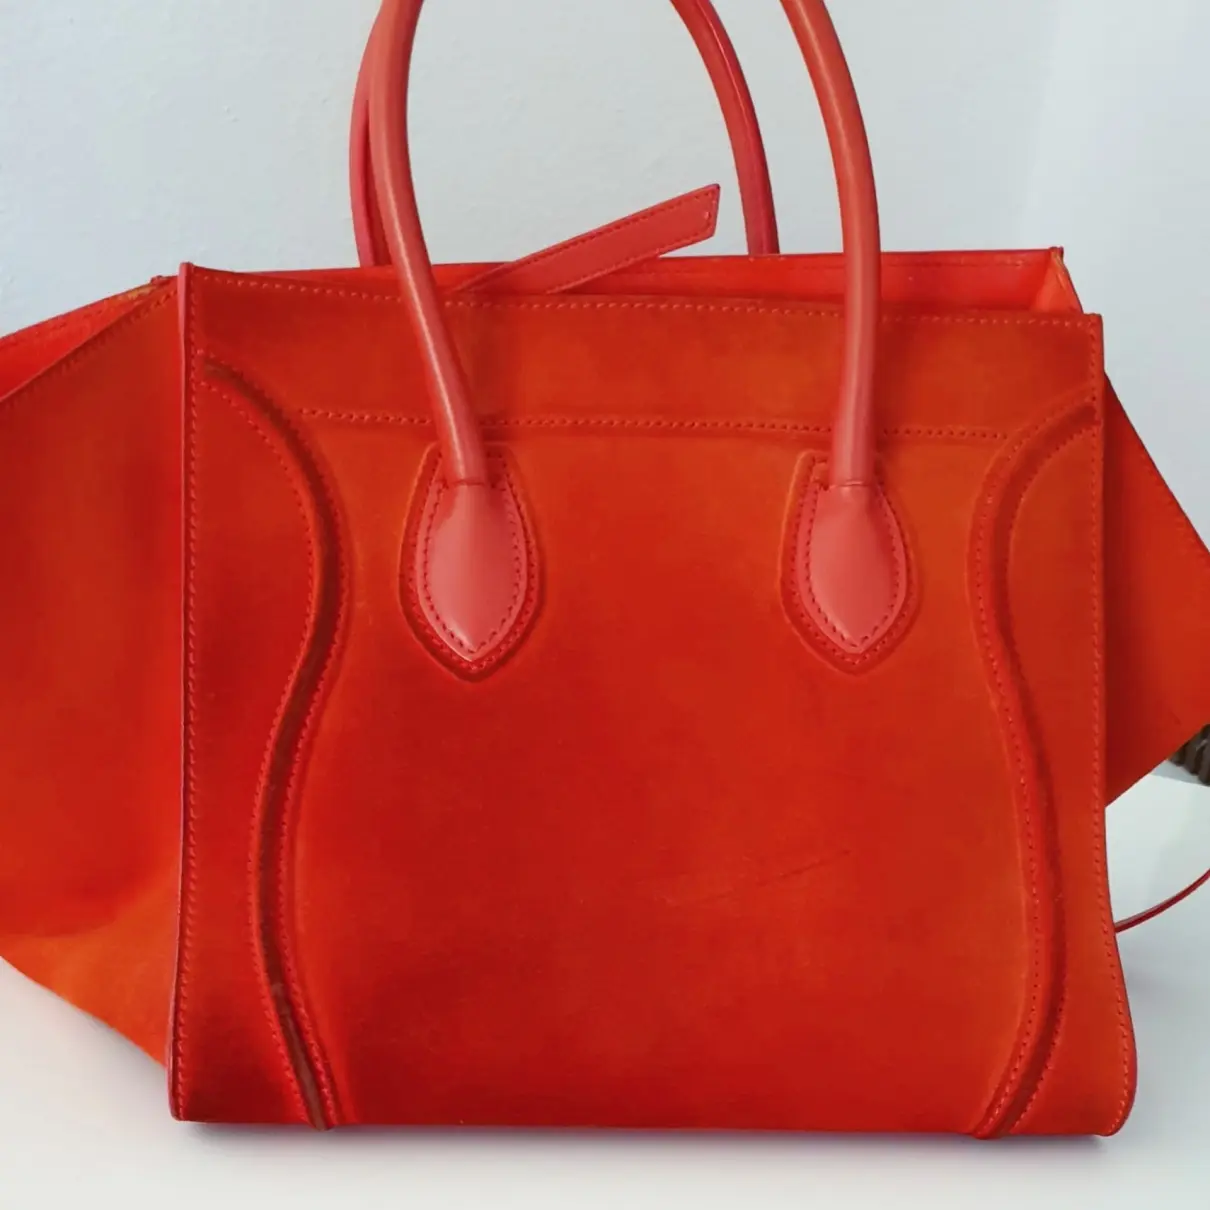 Celine Luggage Phantom handbag for sale